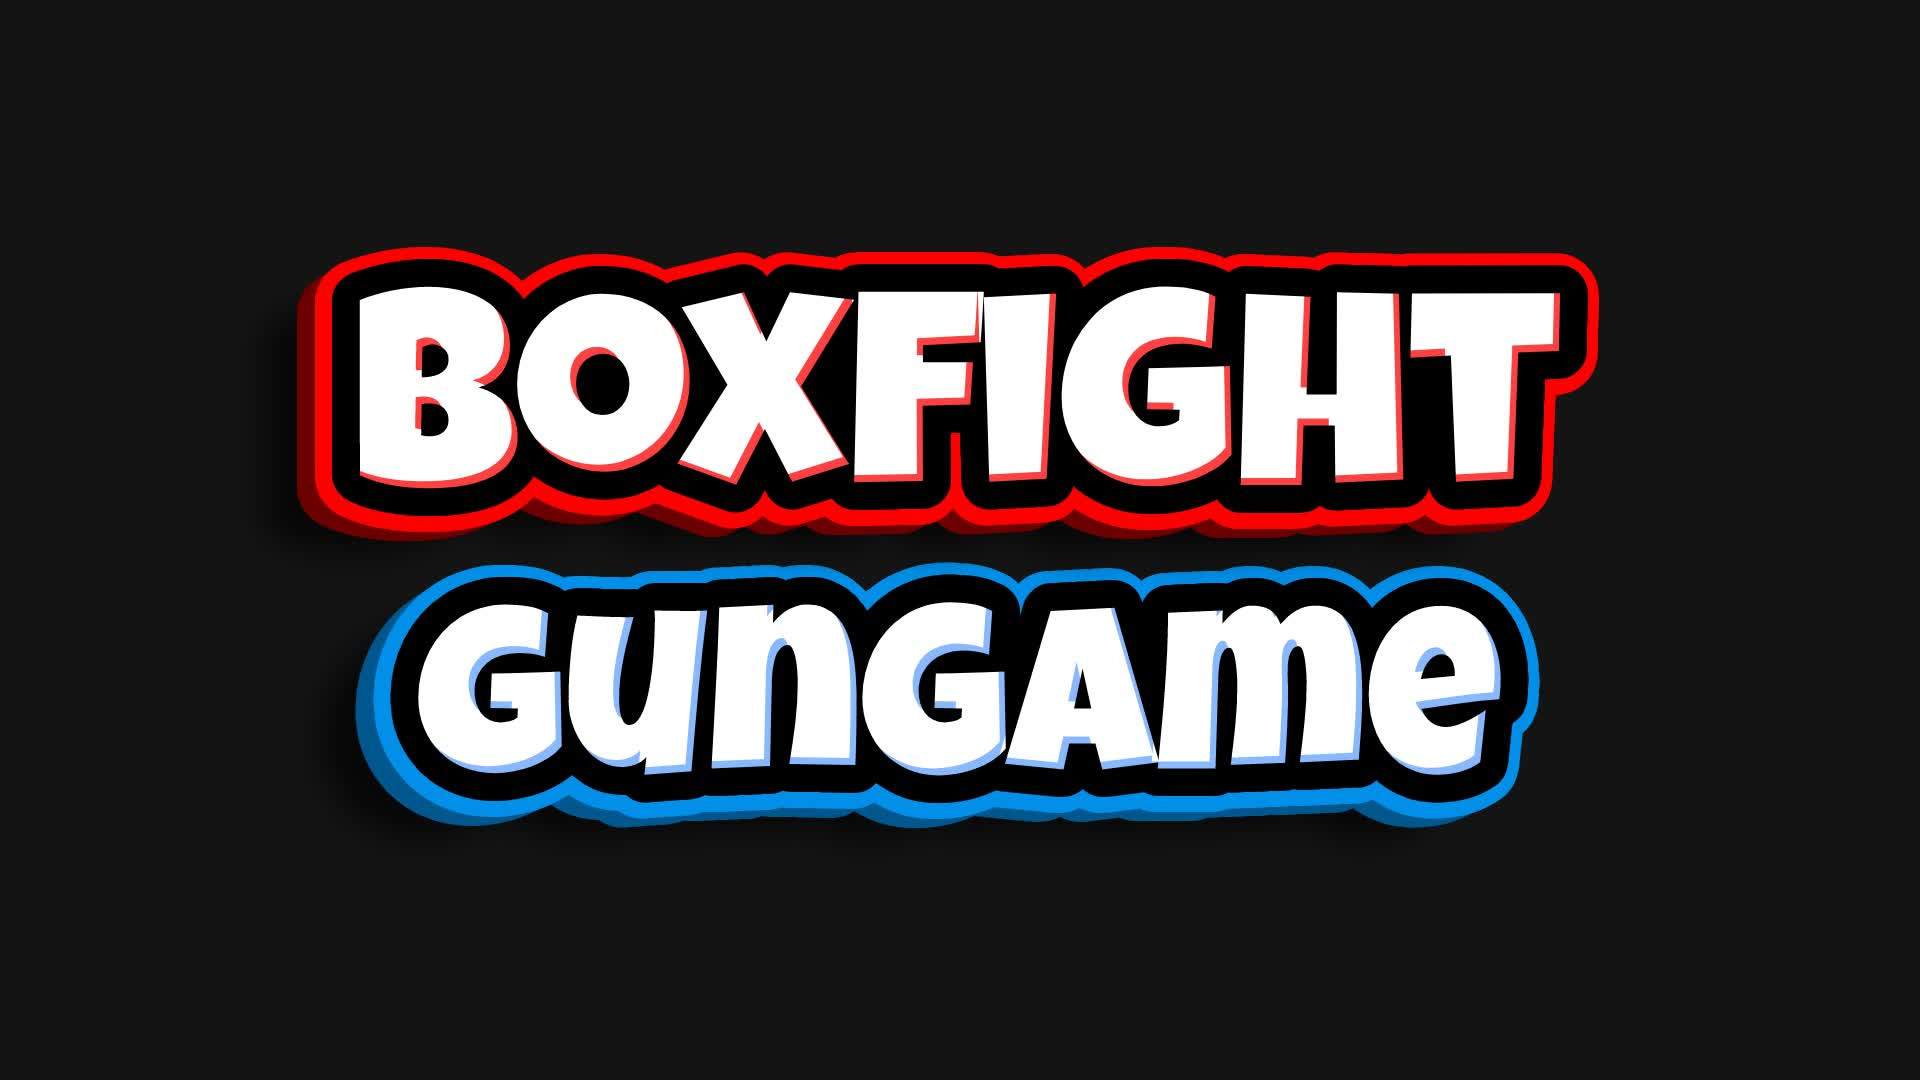 Boxfight Gun Game